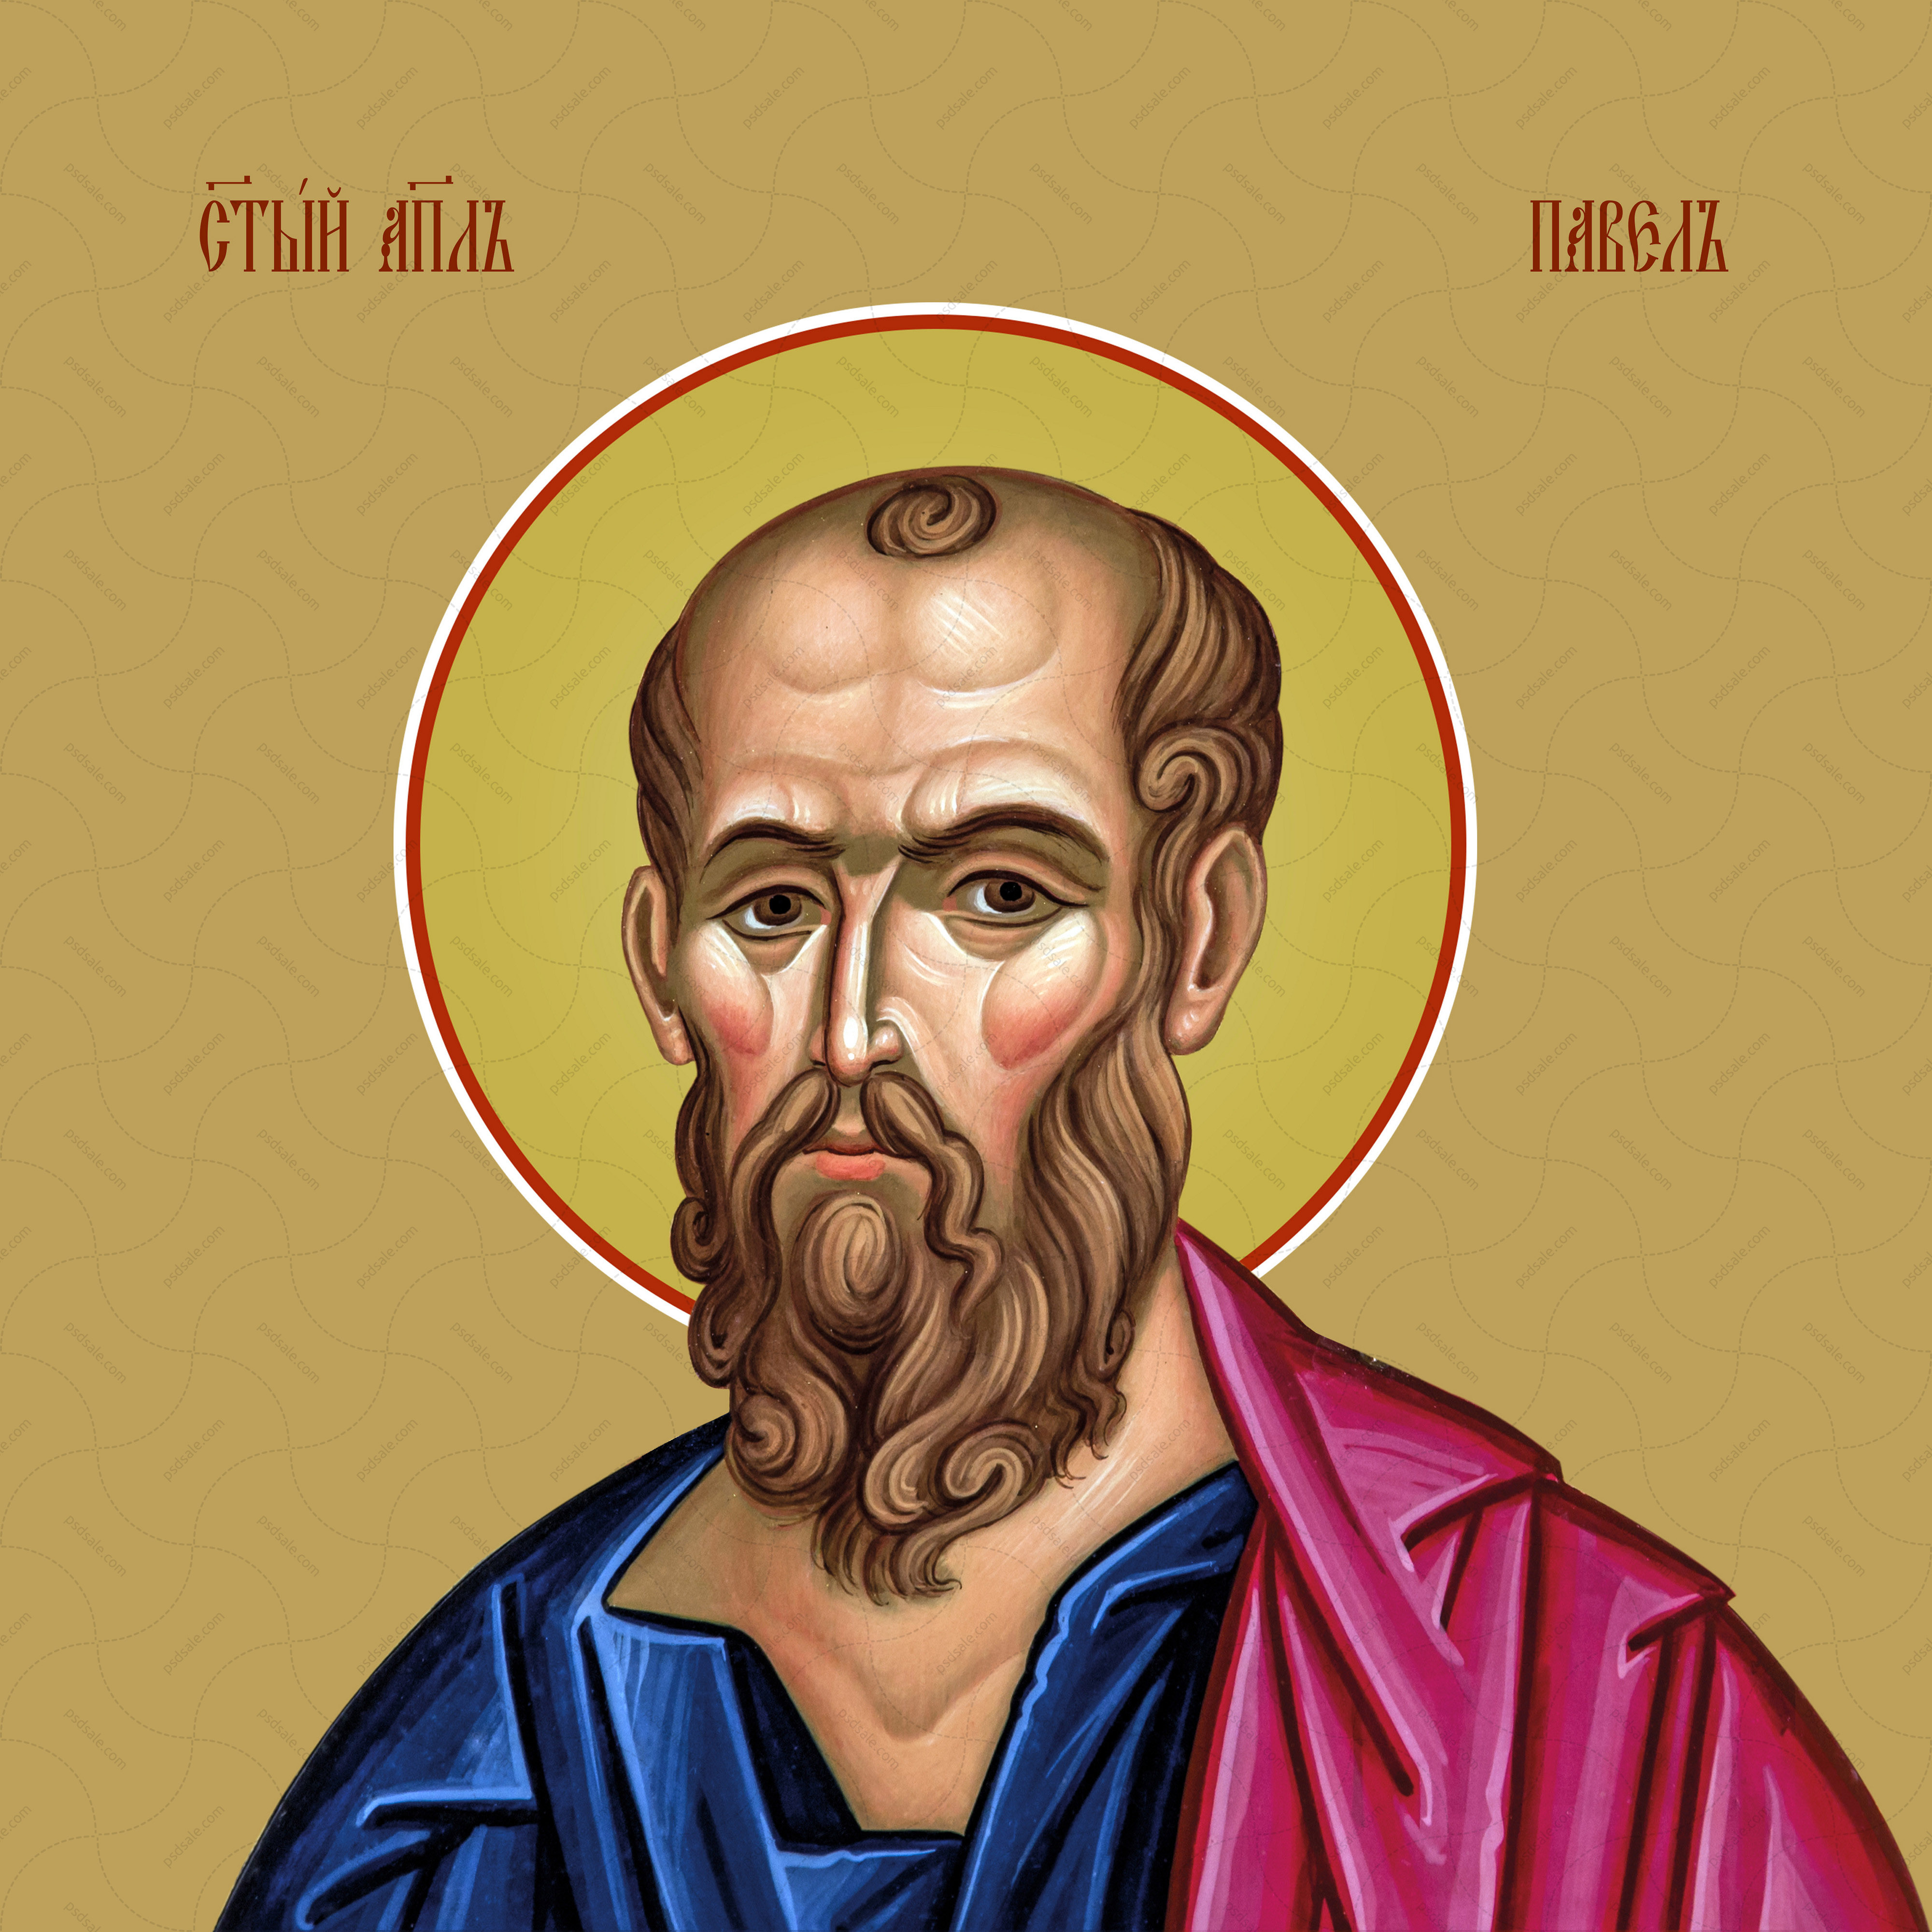 Paul, the apostle